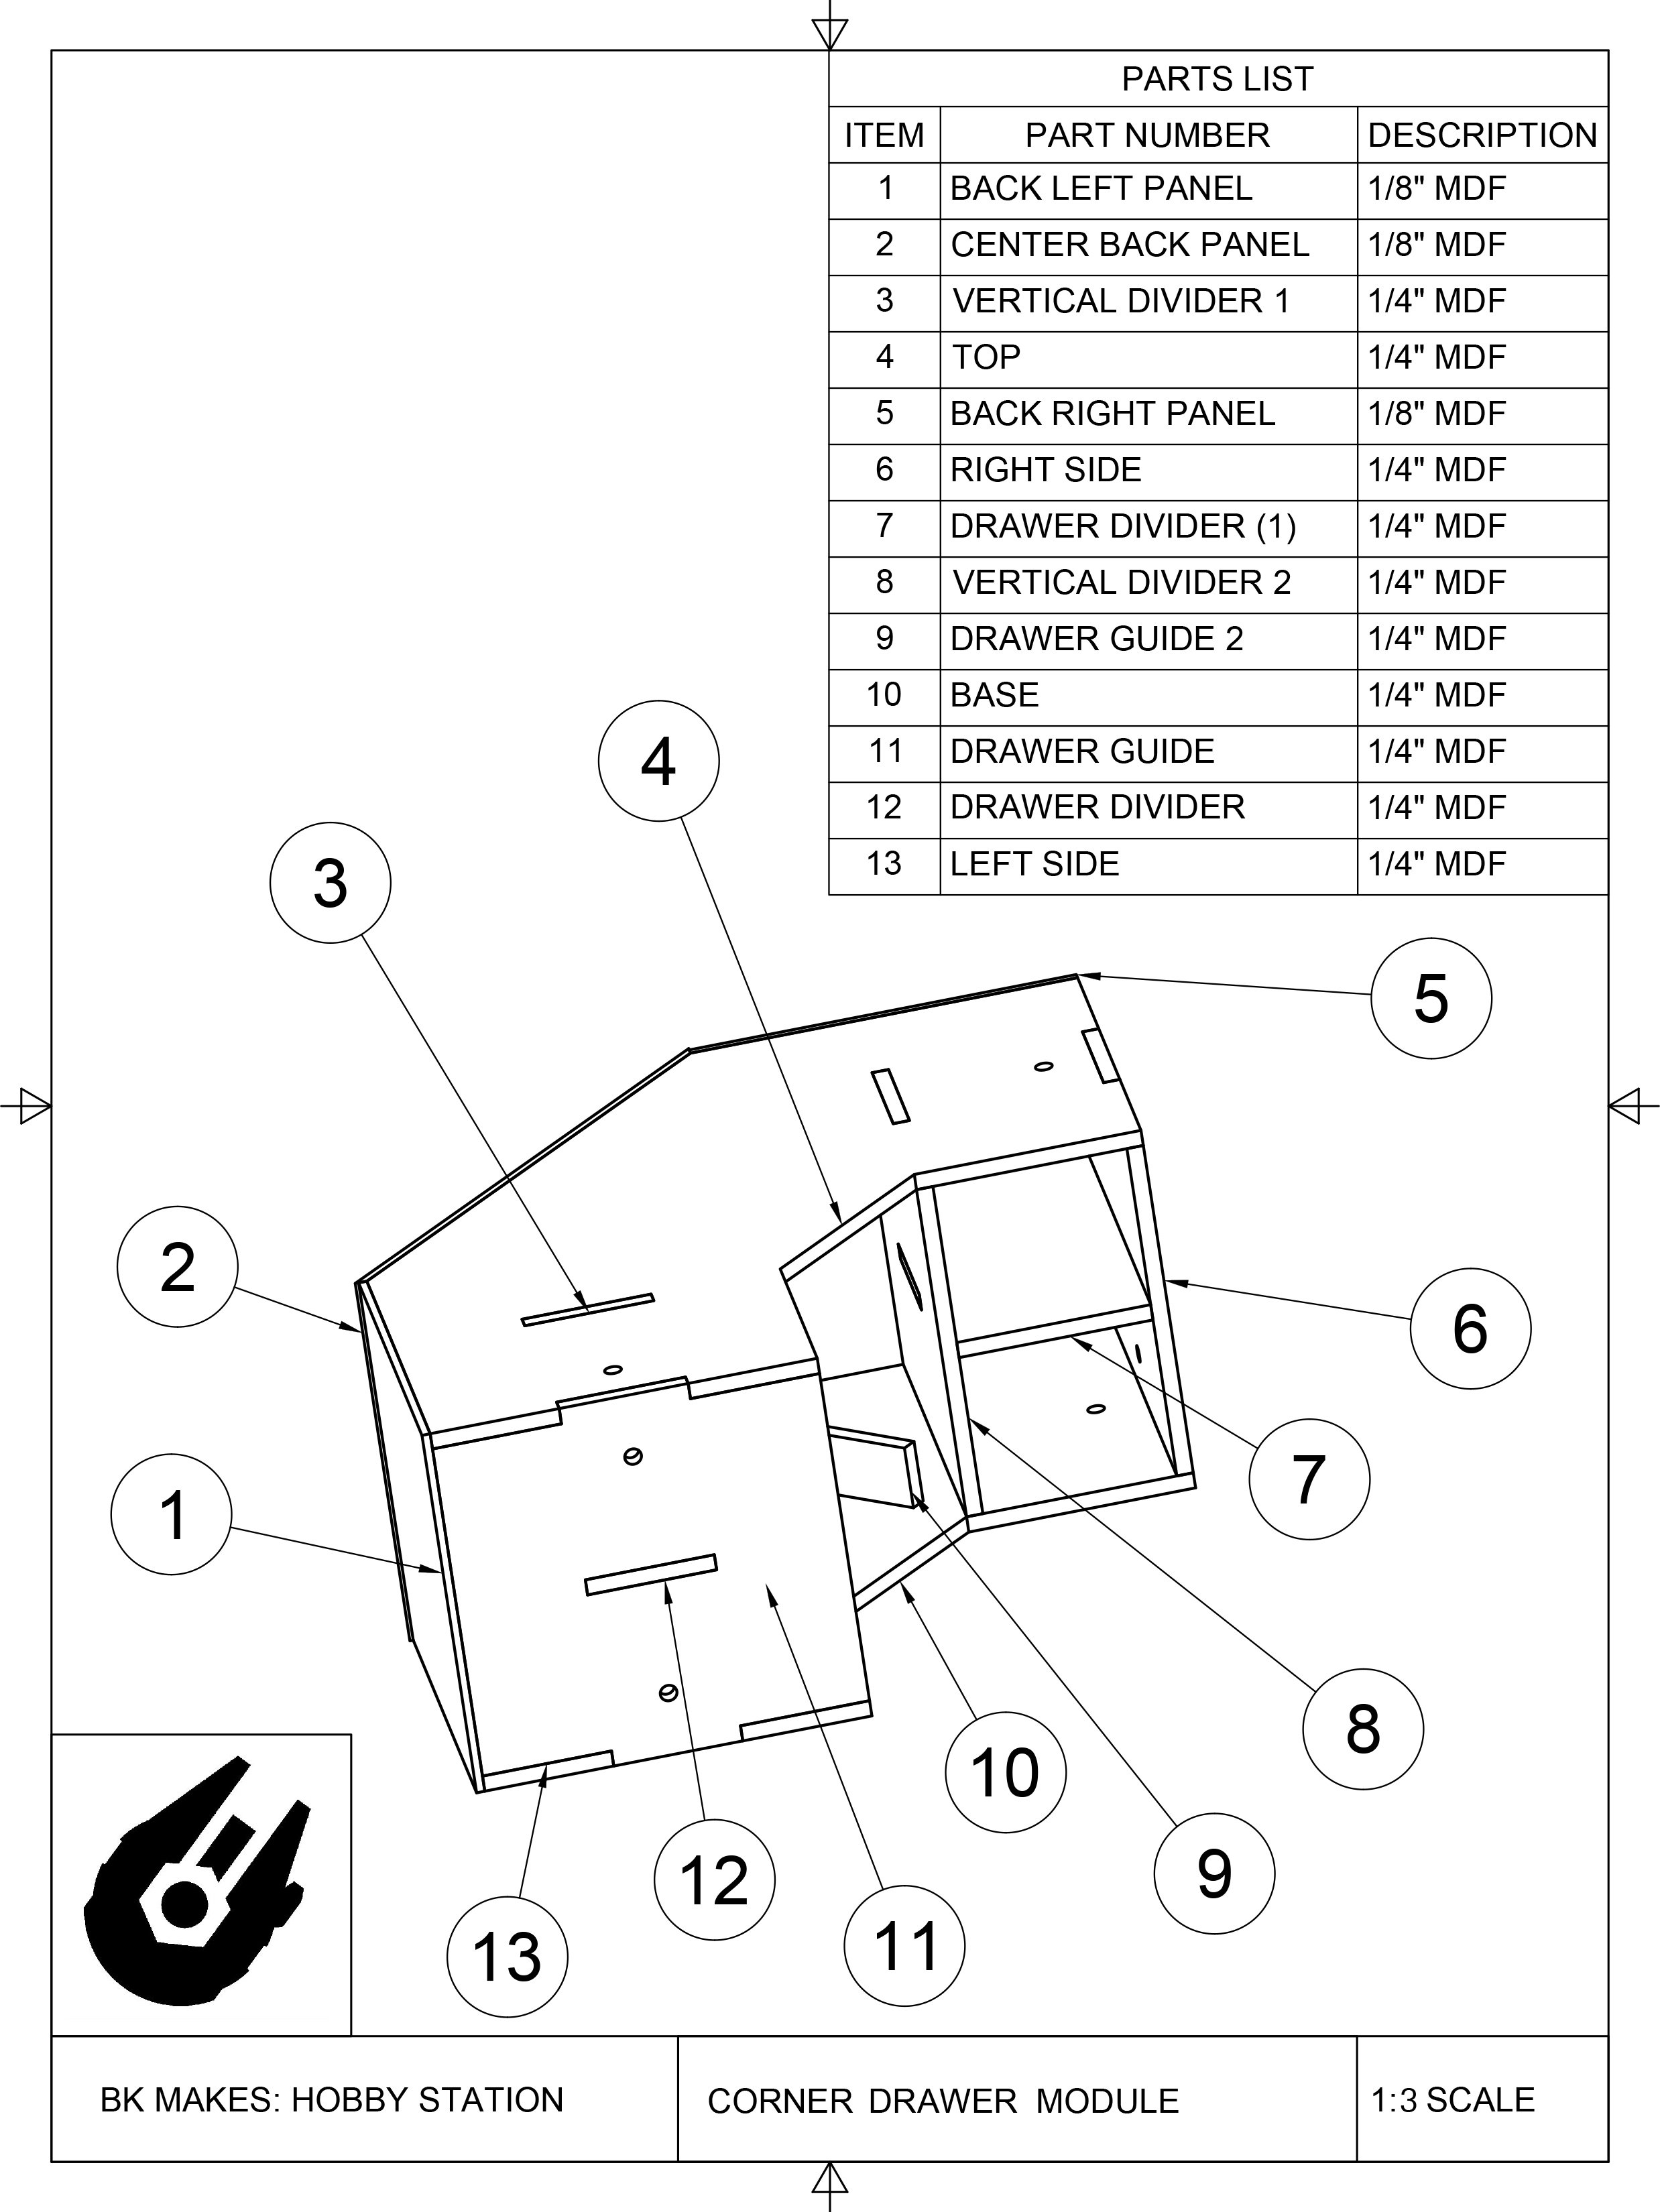 Corner Drawer Module Assembly Sheet.jpg